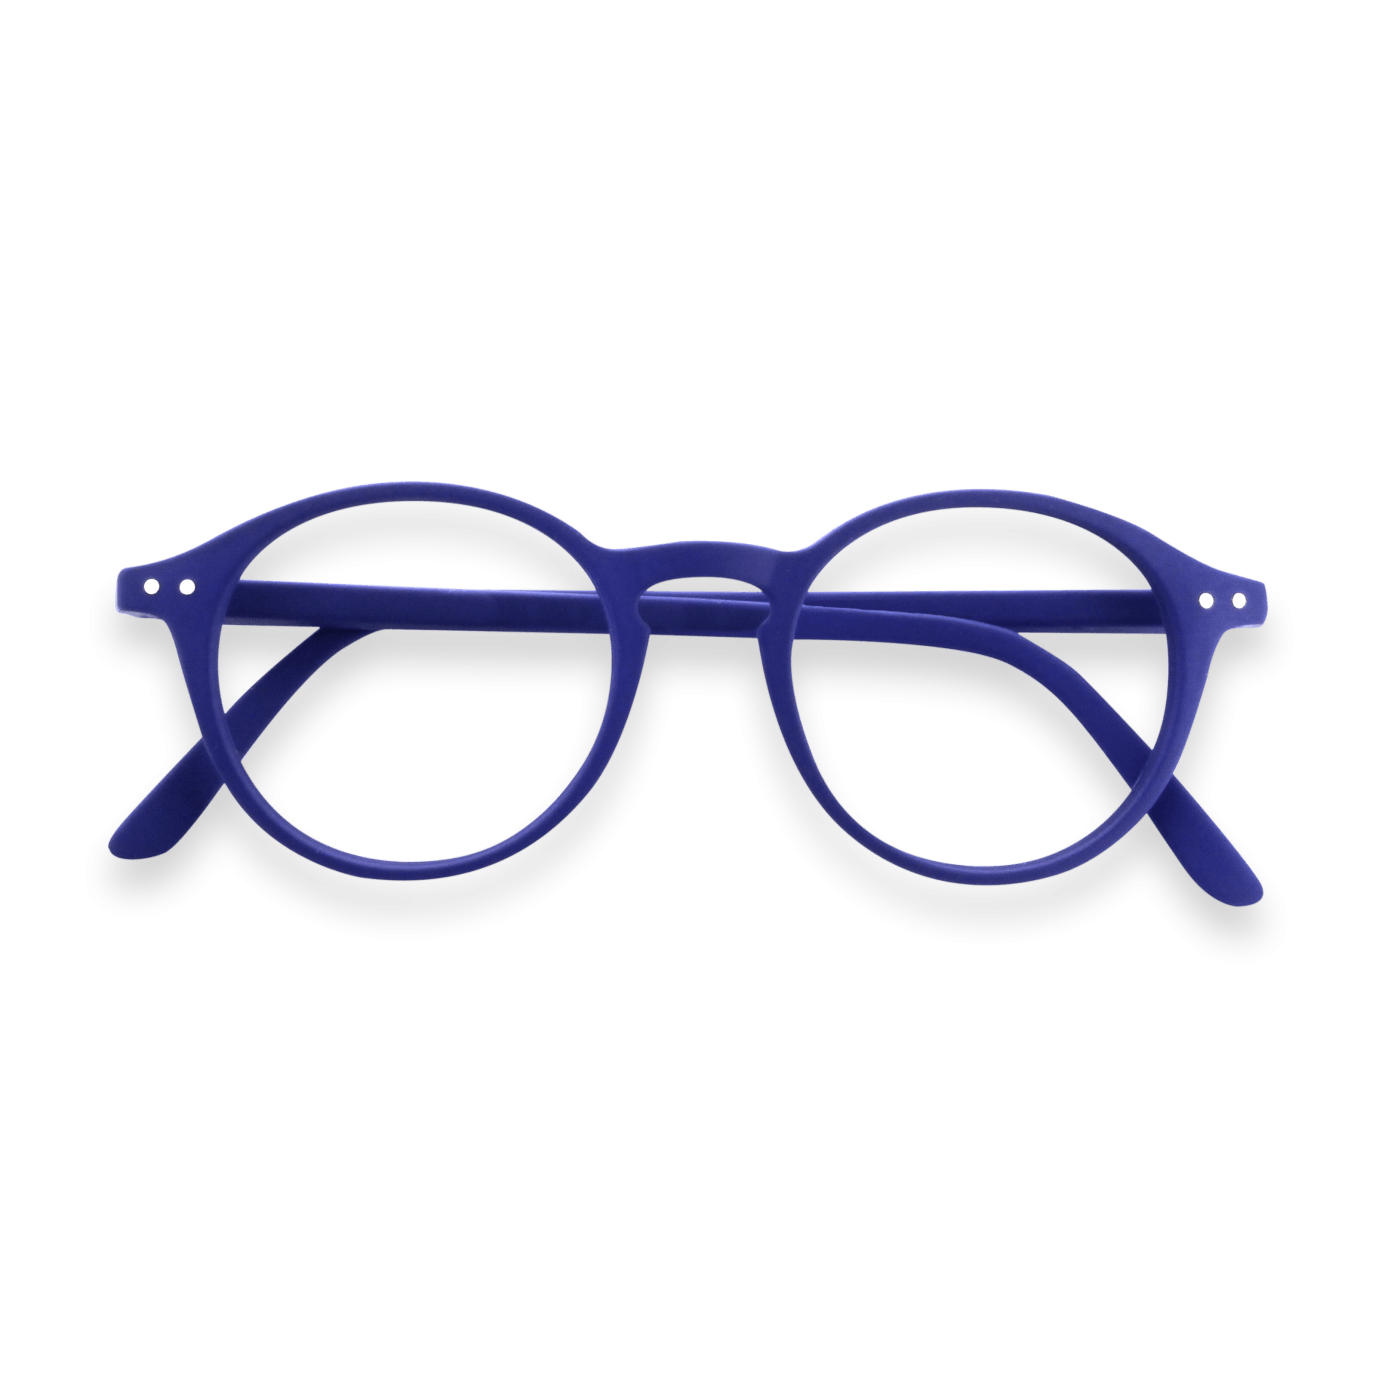 IZIPIZI Navy Blue Style D Reading Glasses